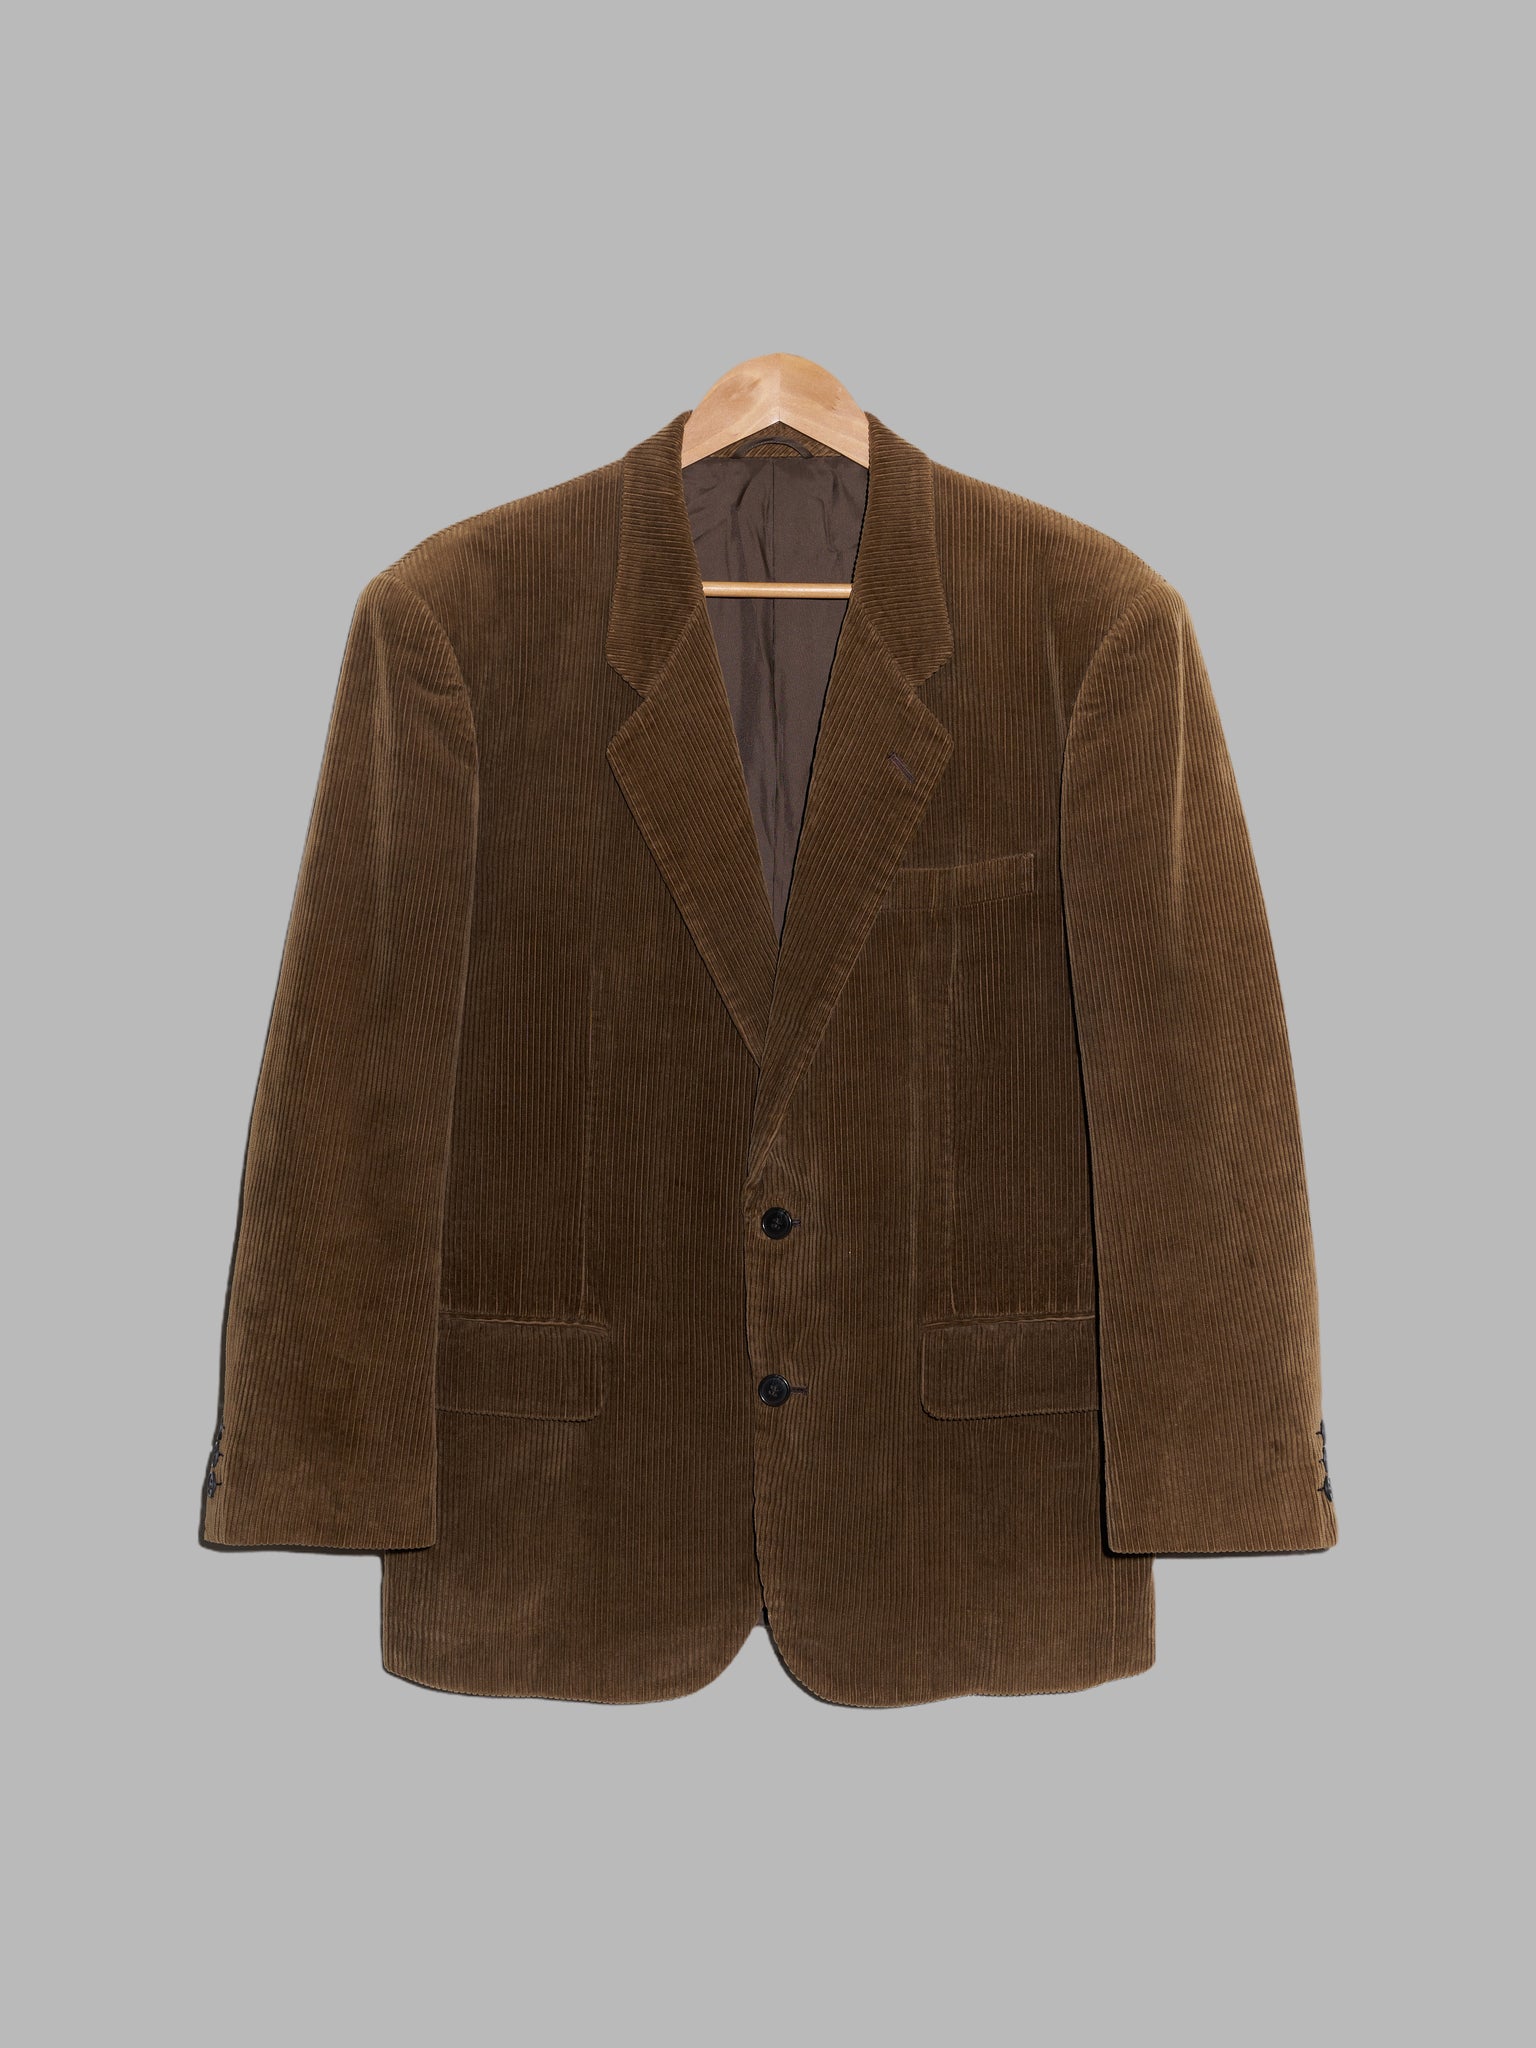 Georges Rech Homme 1970s - 80s brown cotton corduroy 2 button blazer - M